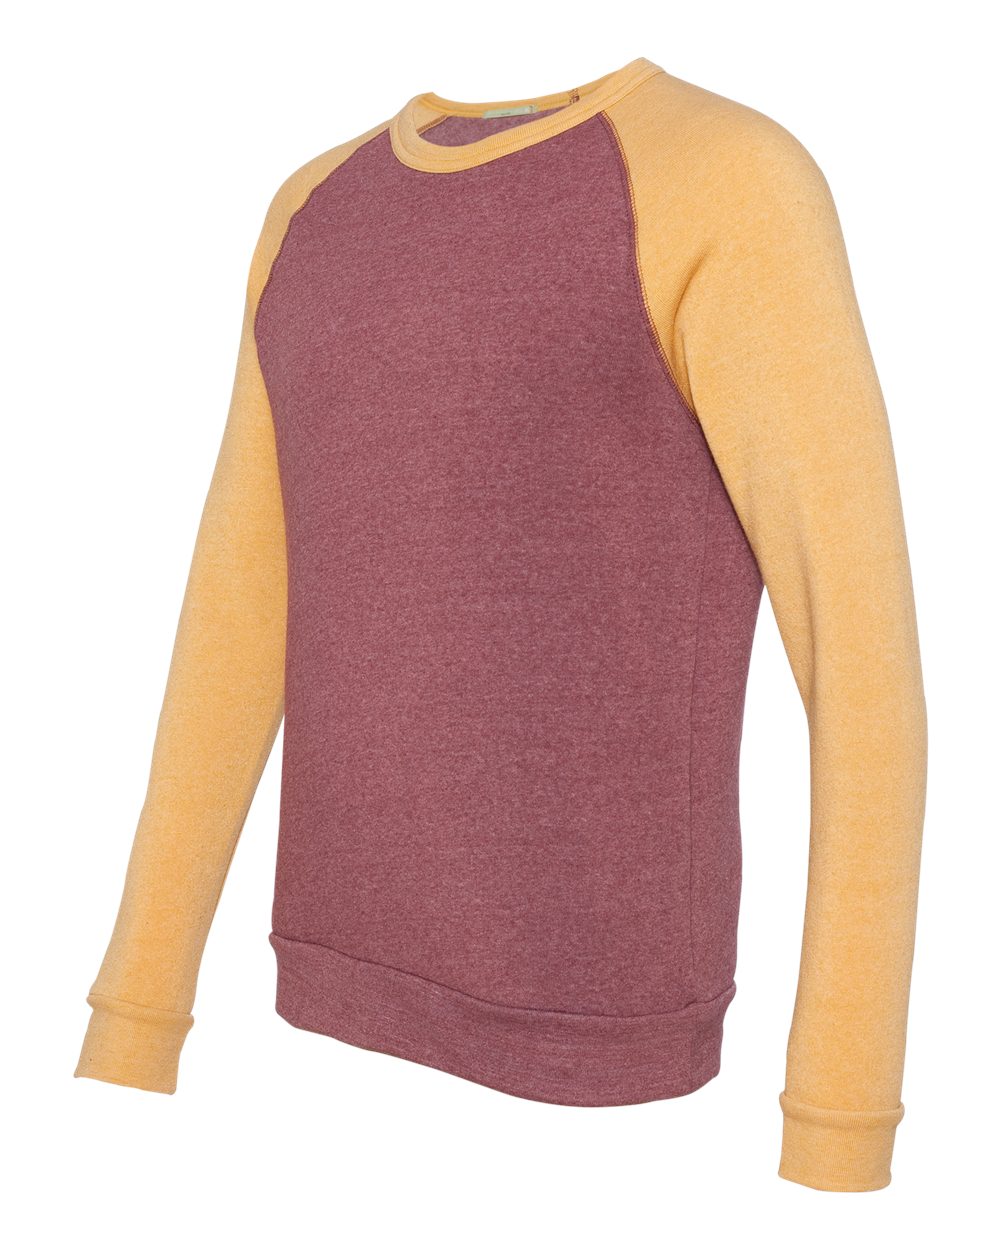 Alternative 32022 - The Champ Unisex Colorblocked Eco Fleece Crewneck Sweatshirt